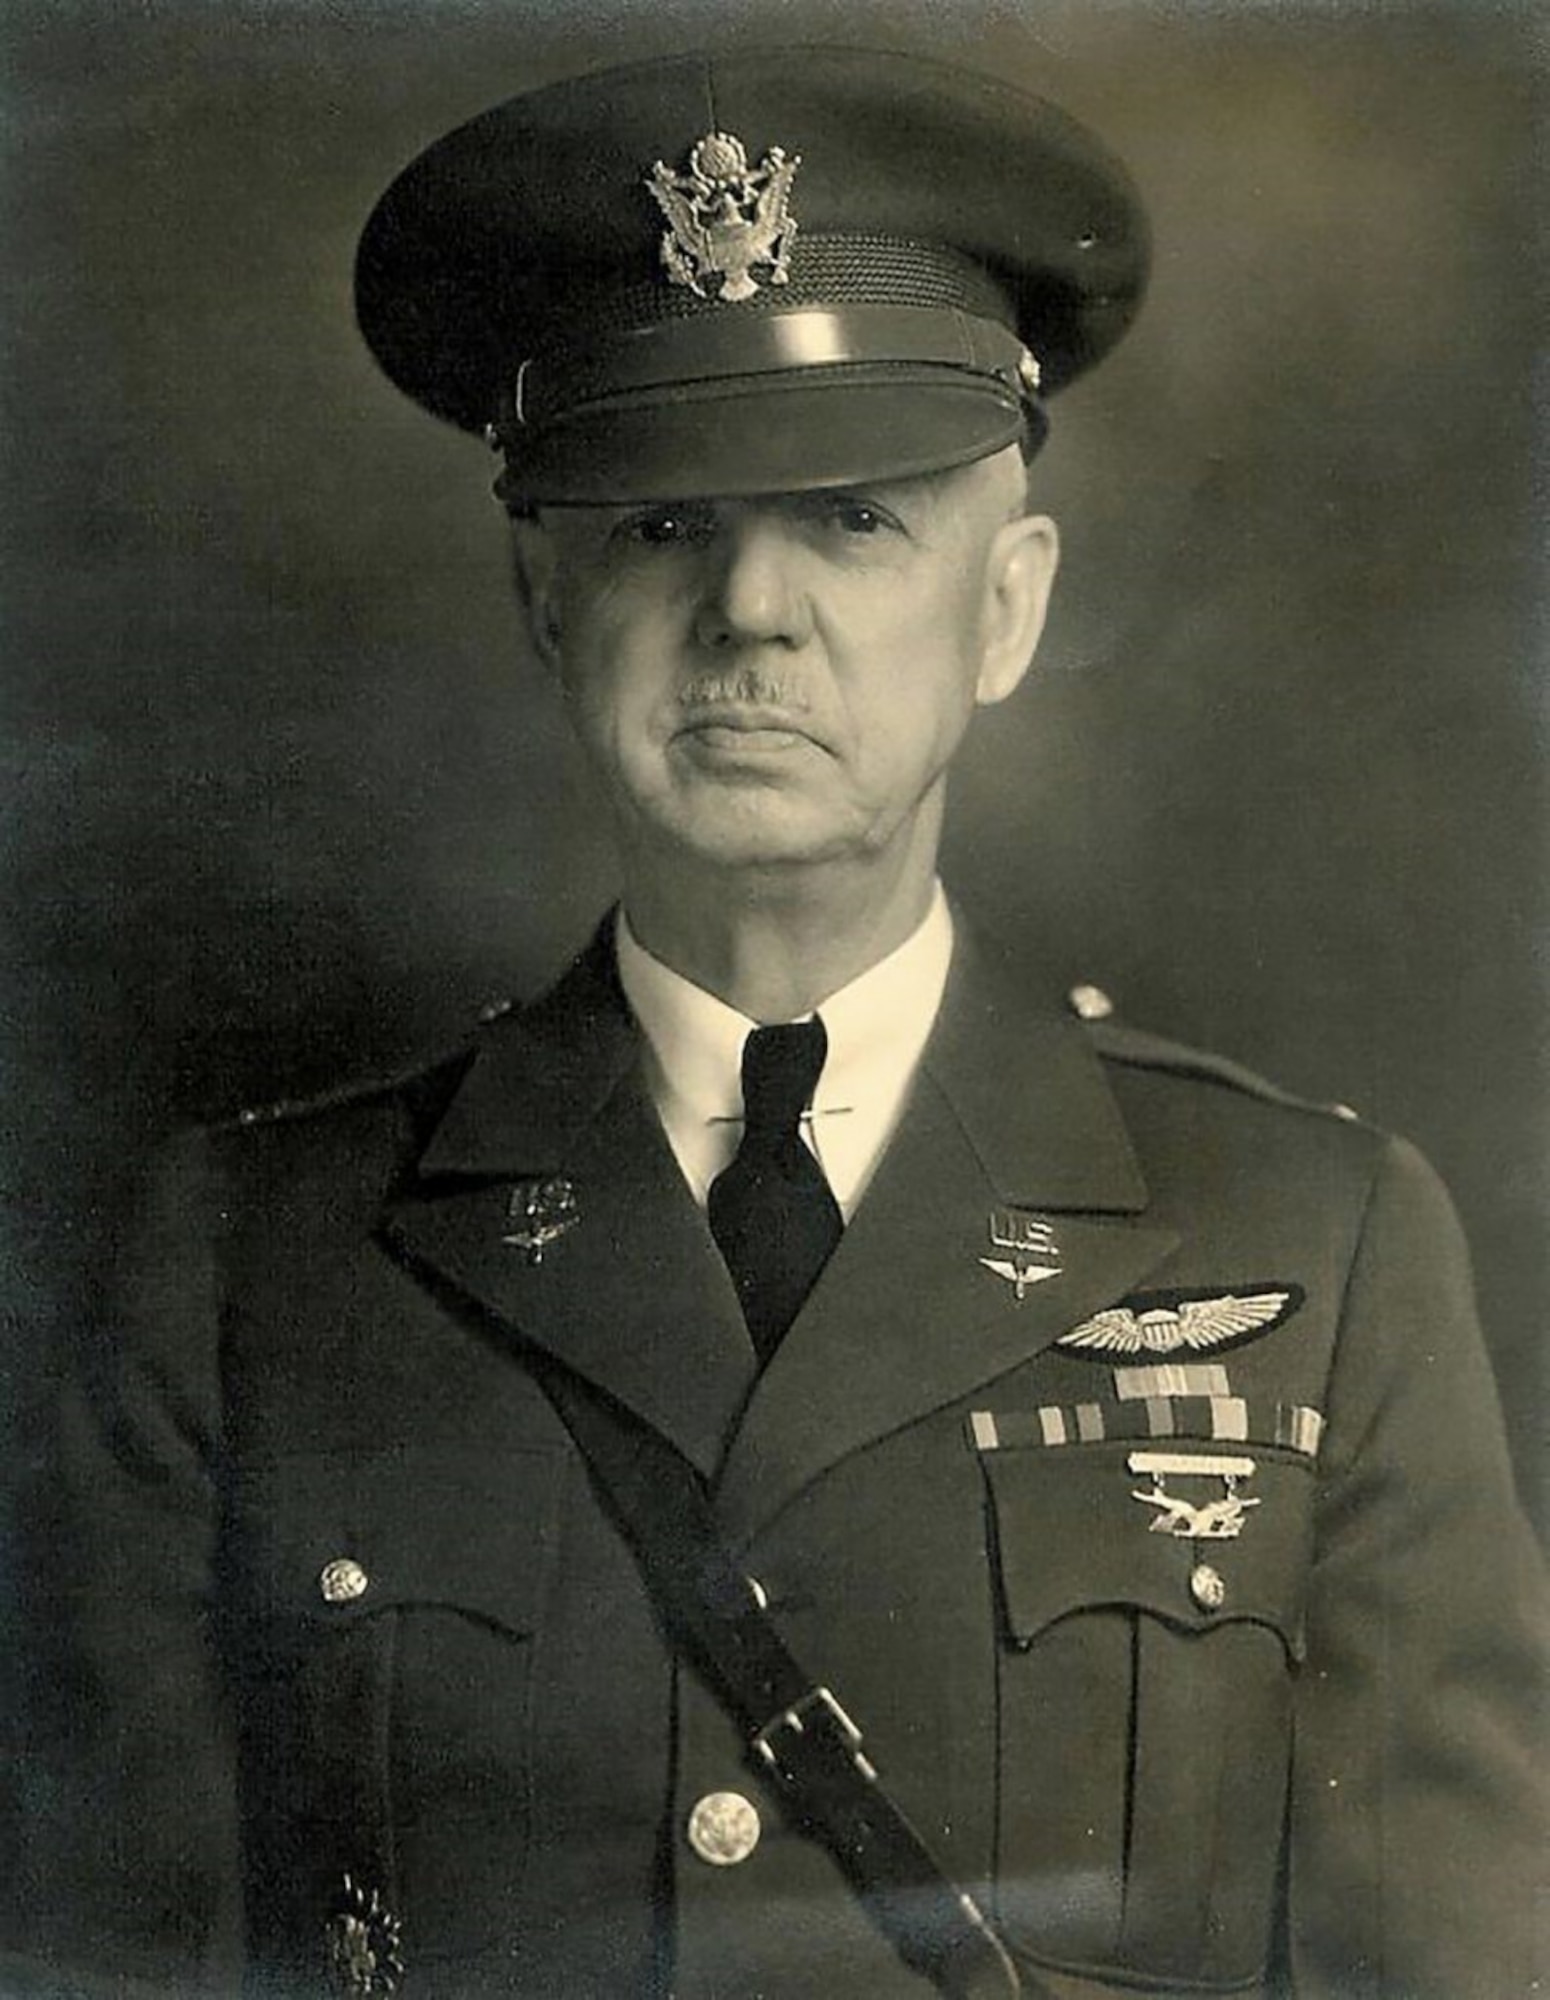 Portrait of U.S. Air Force senior officer.